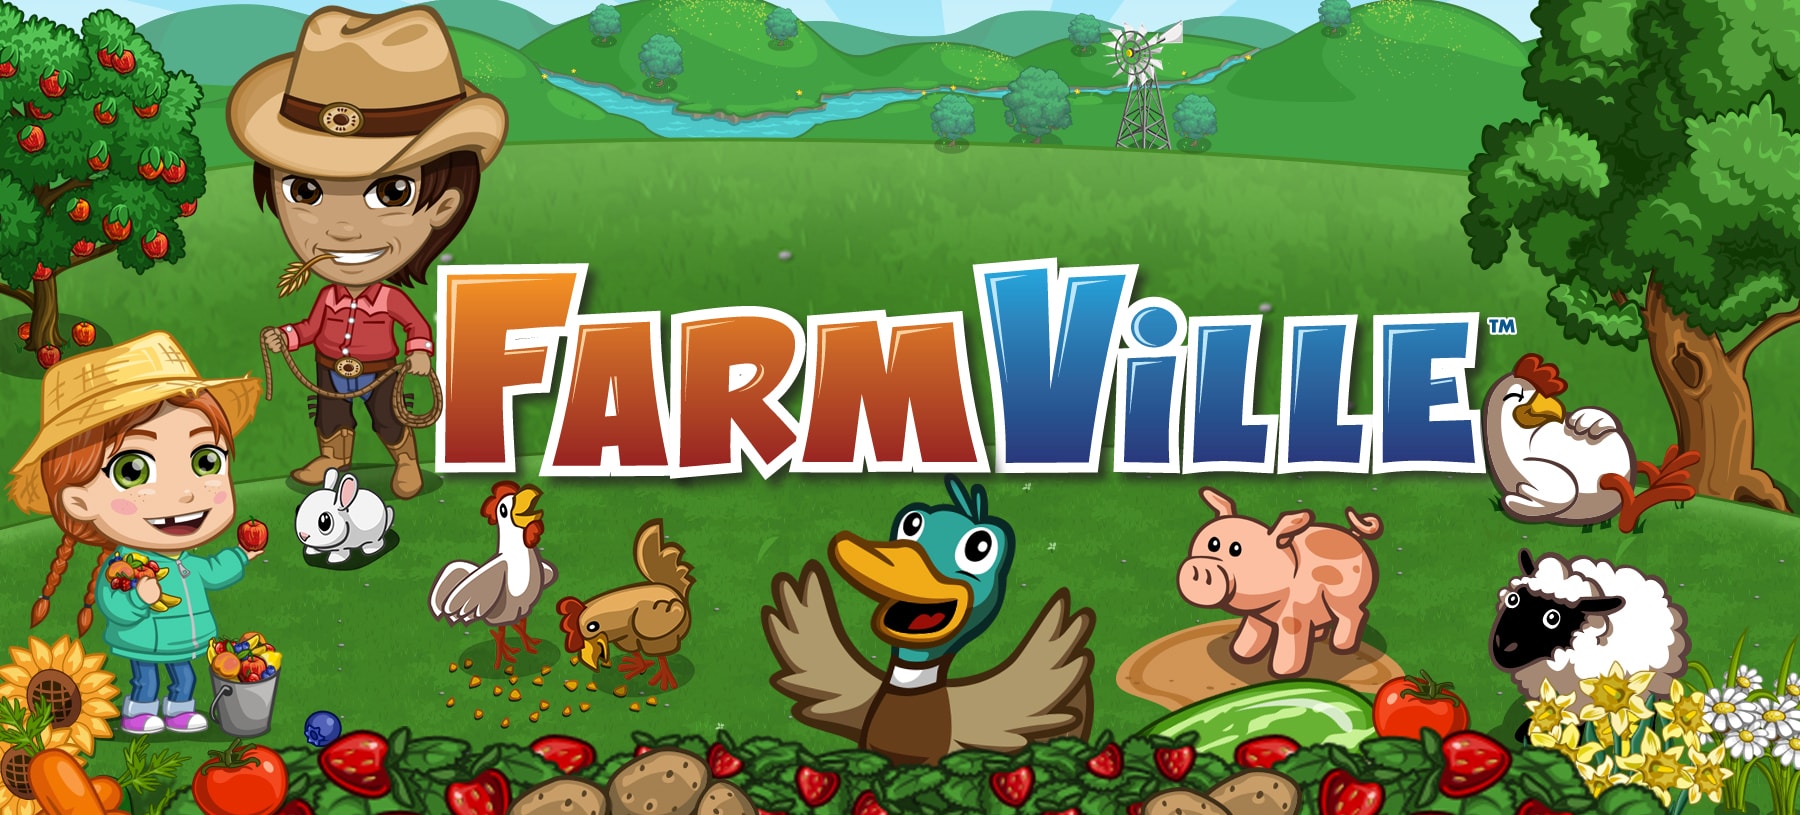 0929-farmville